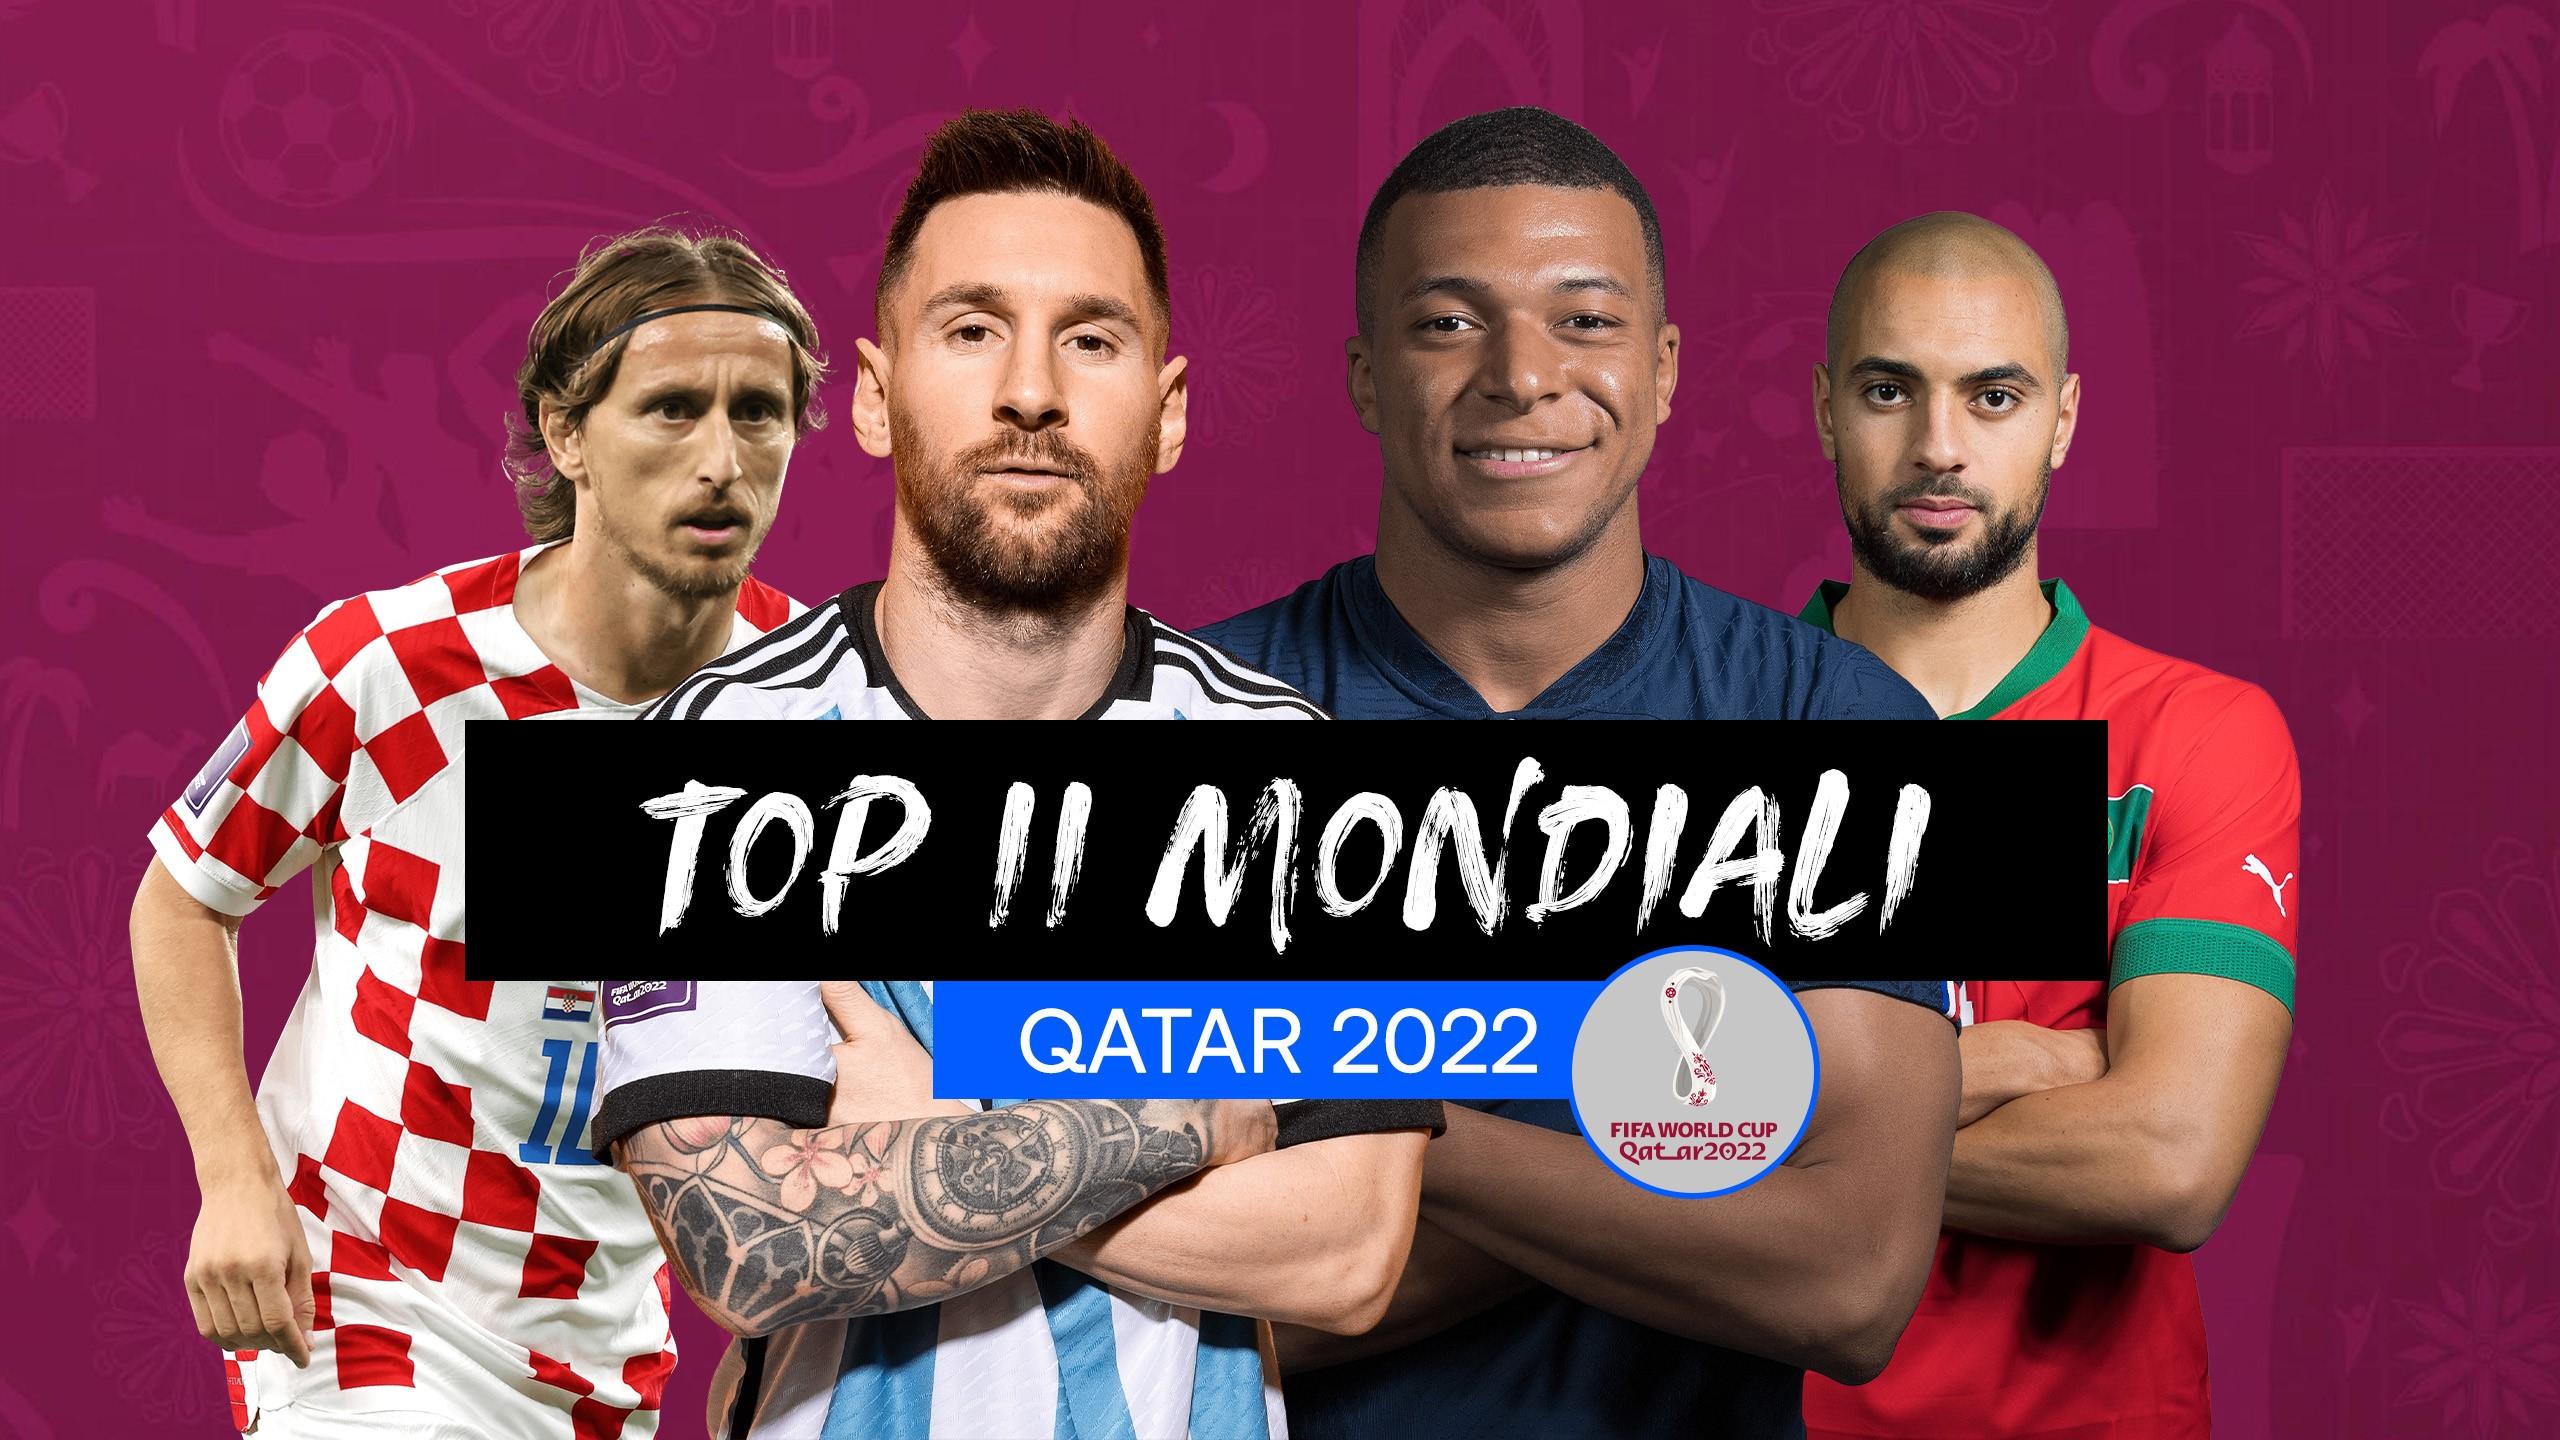 Da Theo Hernandez a Messi fino a Modric: la top 11 di Qatar 2022